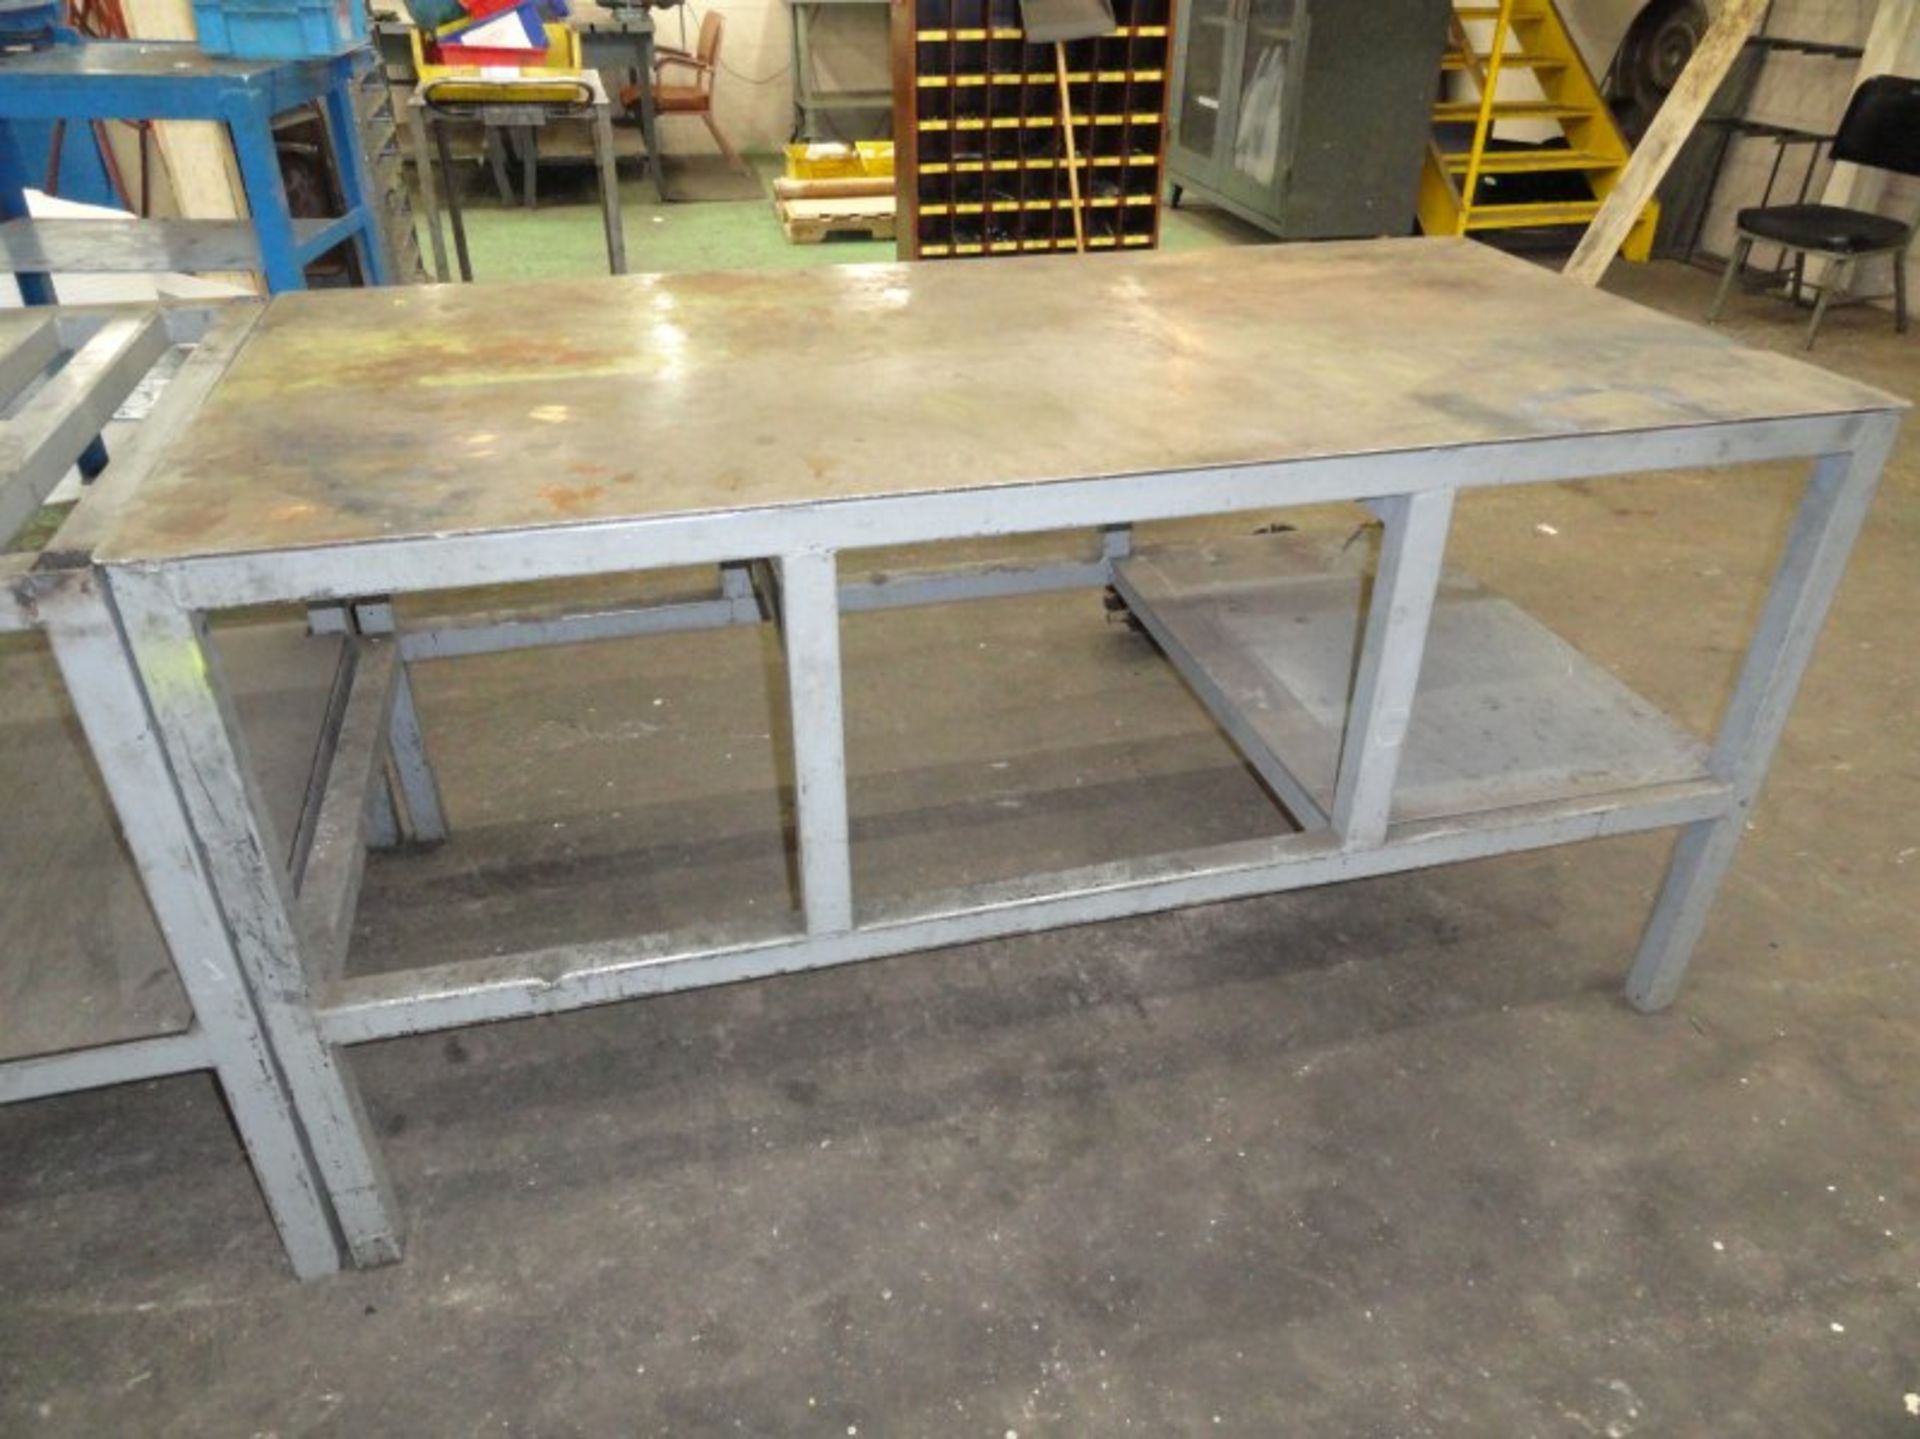 Steel set up tables